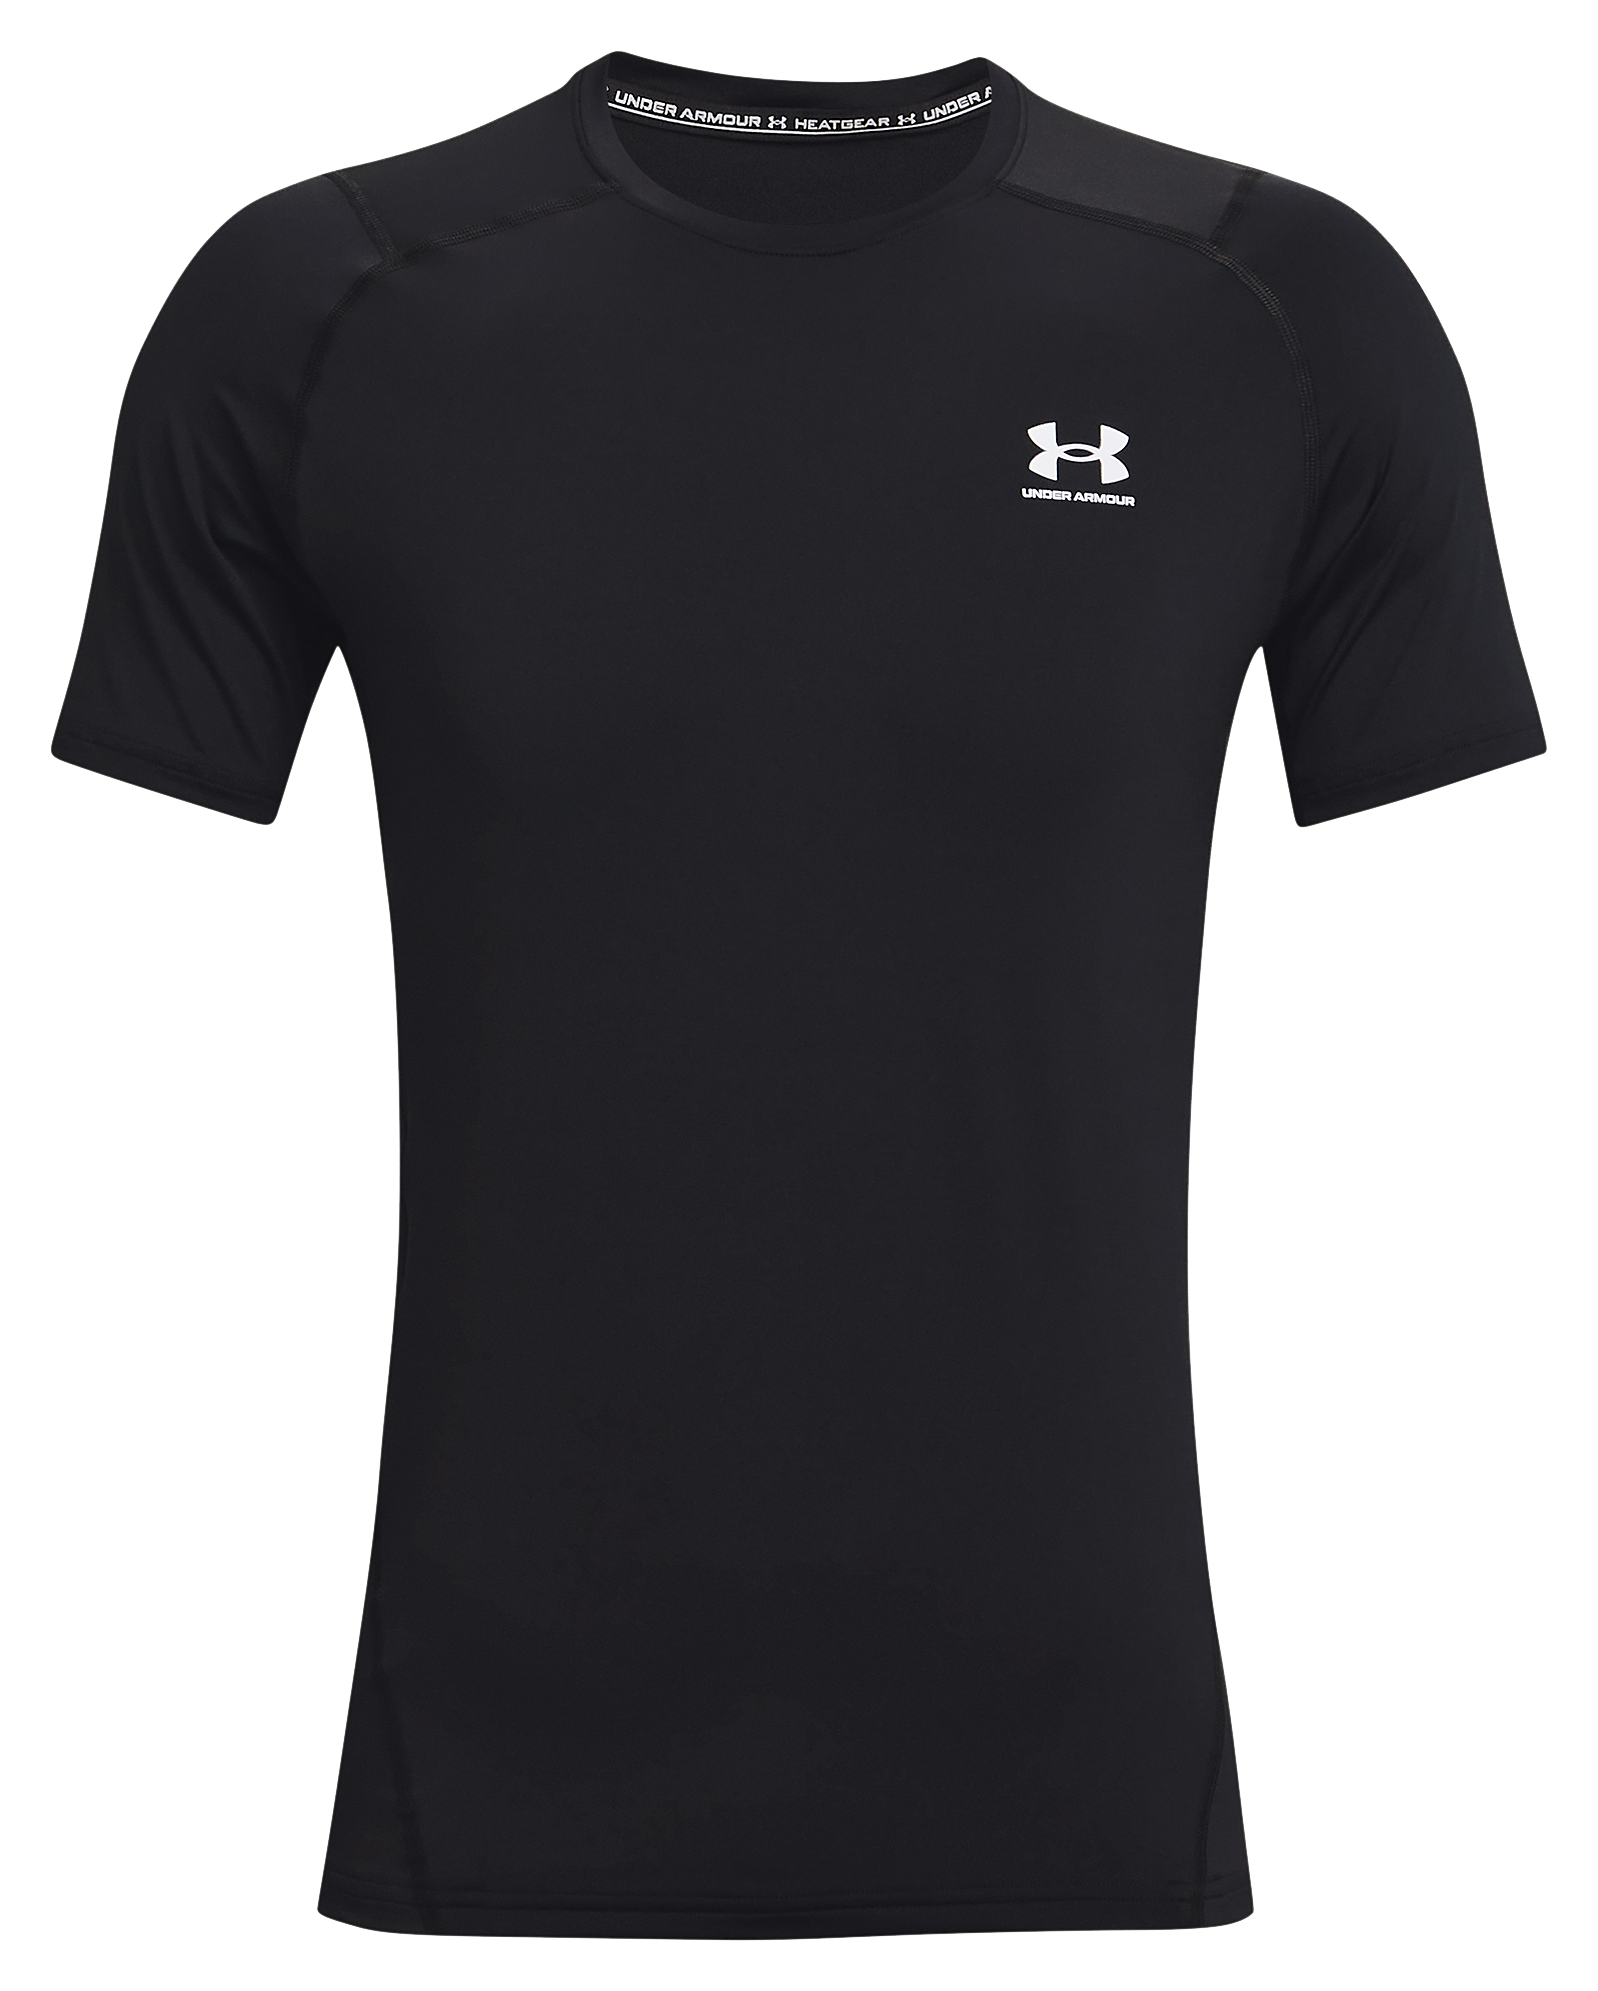 Under Armour HeatGear Fitted Short-Sleeve T-Shirt for Men - Black - 2XLT